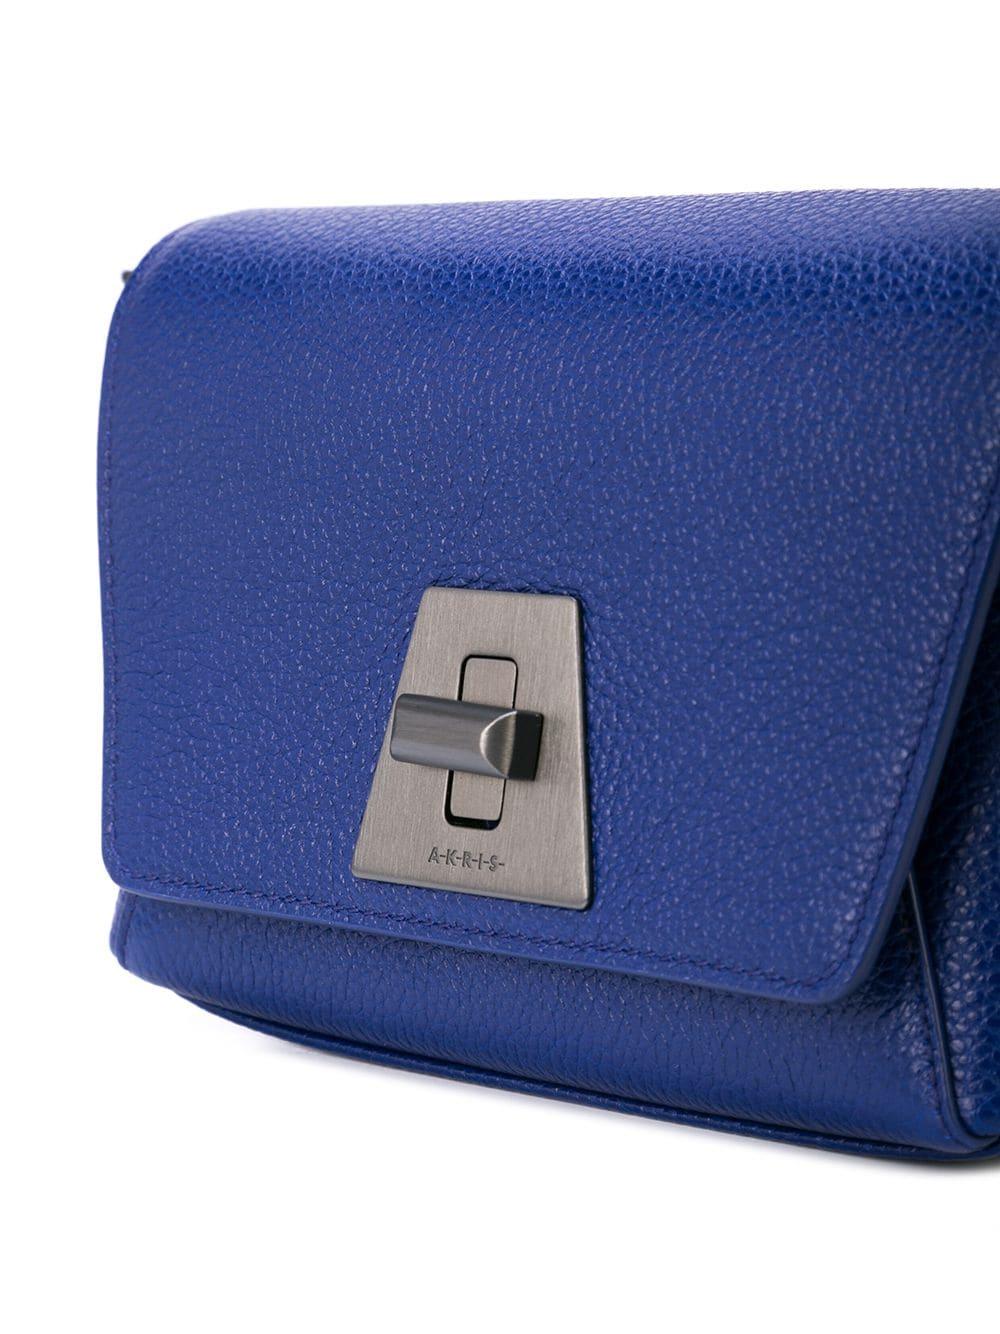 Akris Leather Anouk Crossbody Bag in Blue - Lyst